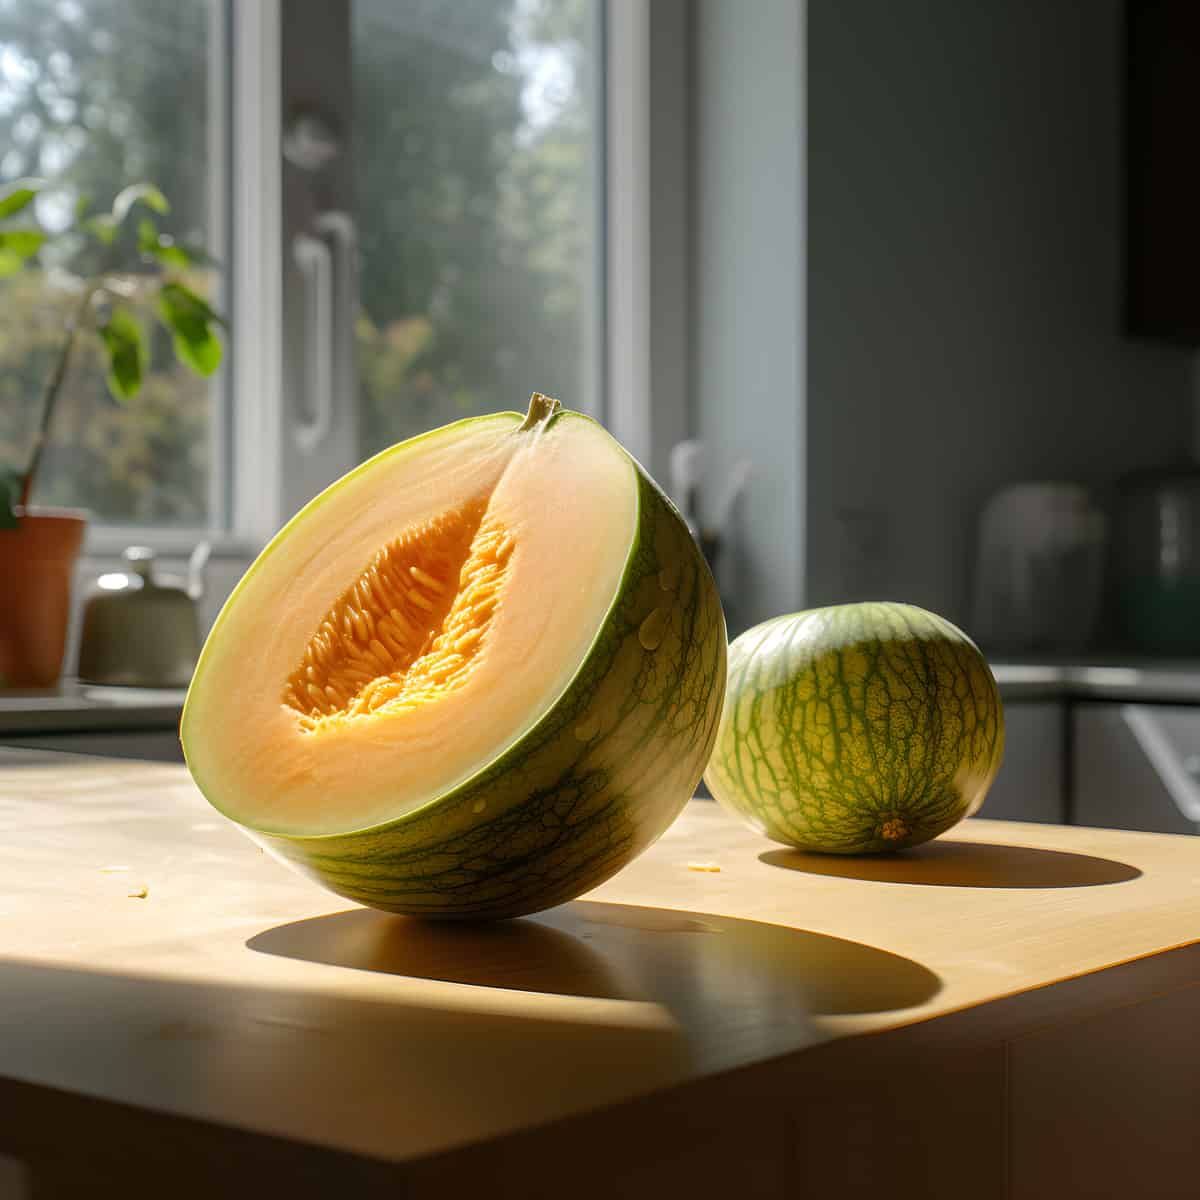 Crenshow Melon on a kitchen counter